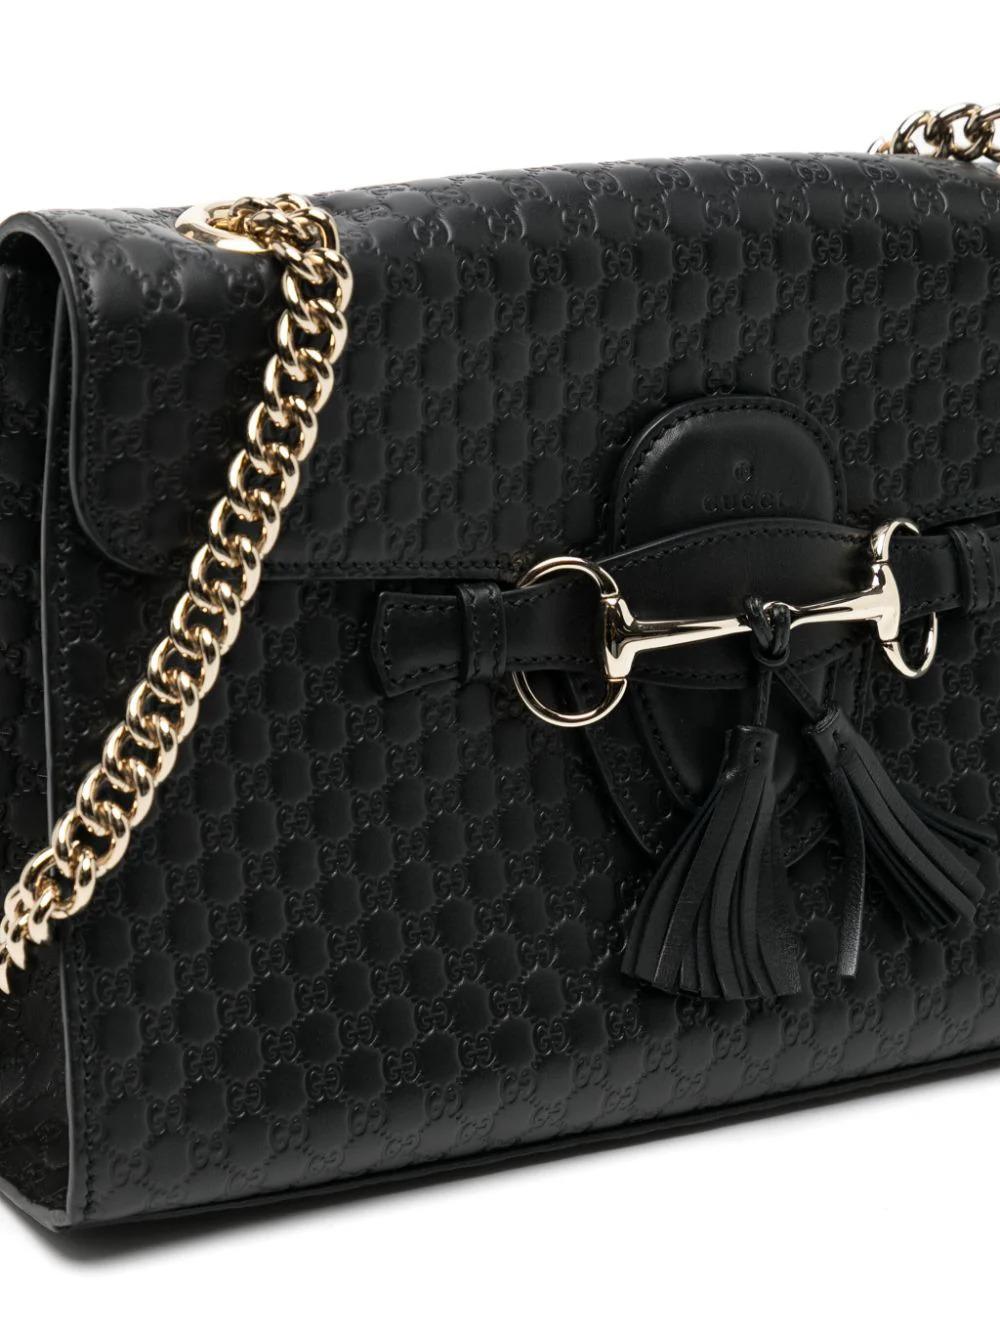 Women's or Men's Gucci Guccissima horsebit-detail shoulder bag For Sale